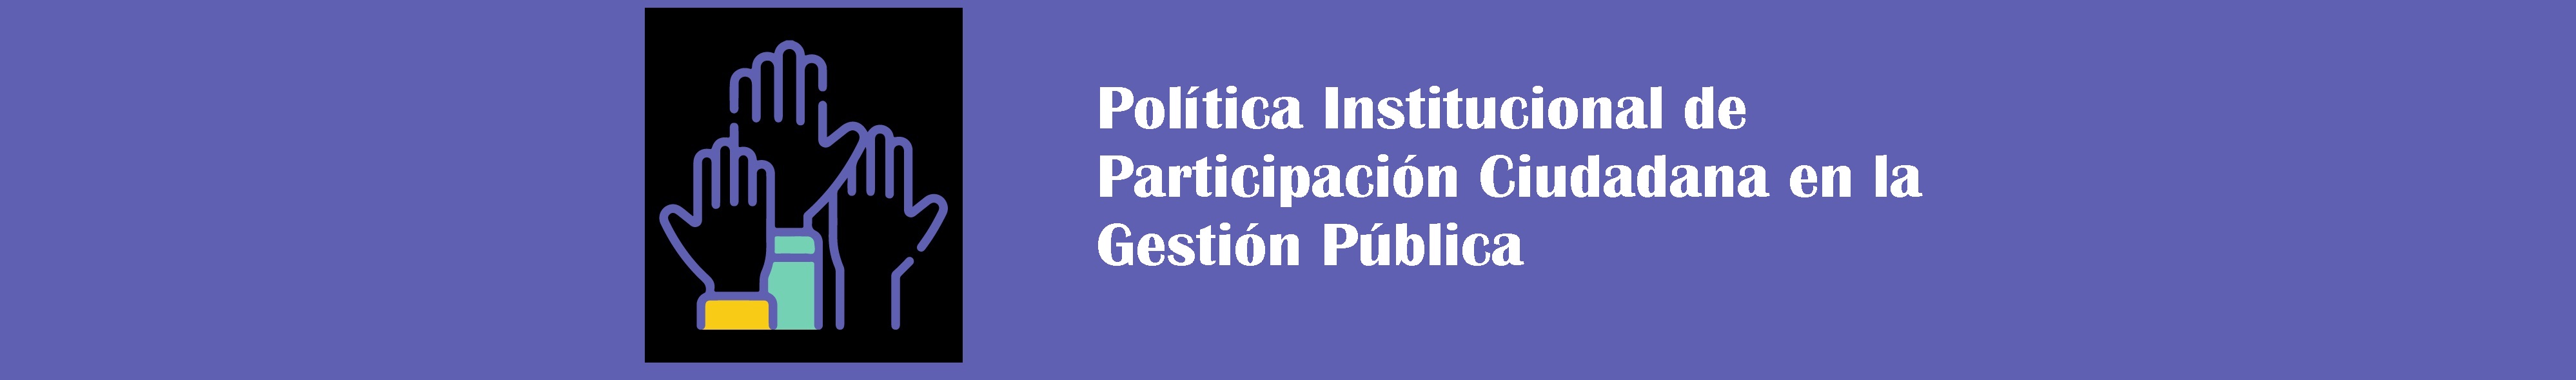 banner-menu_participa_politica-participacion